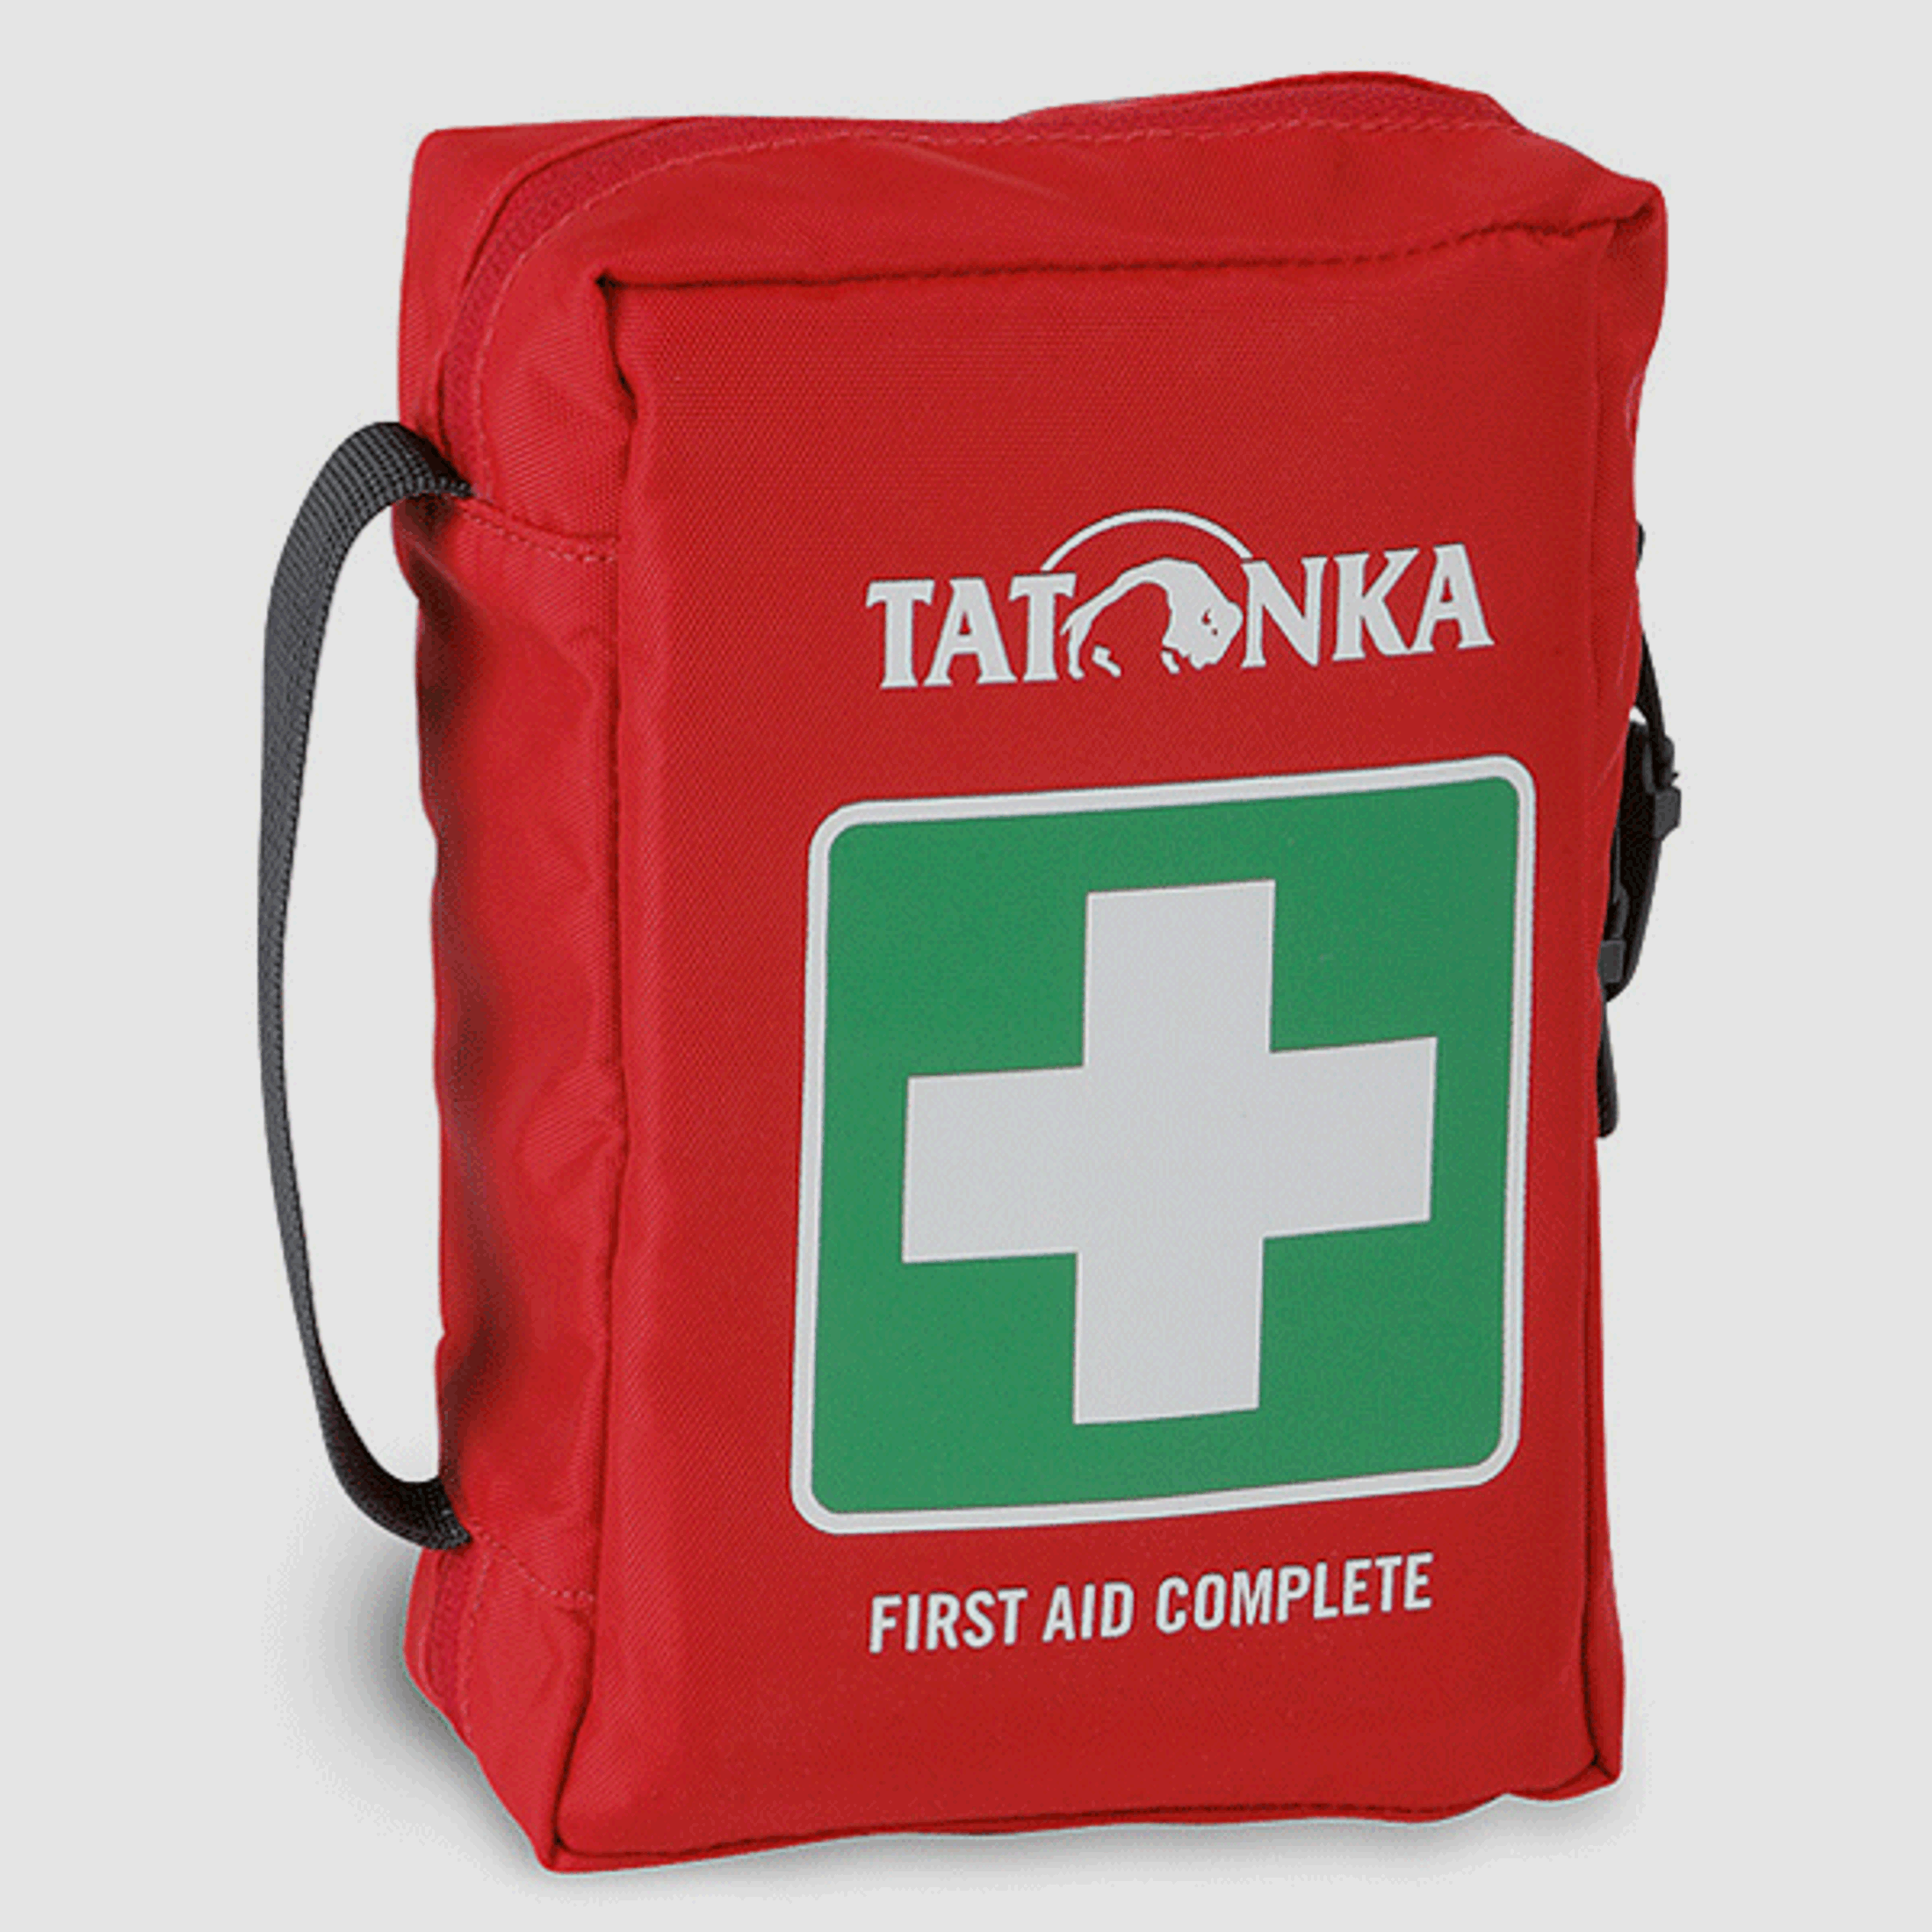 TATONKA First Aid Complete